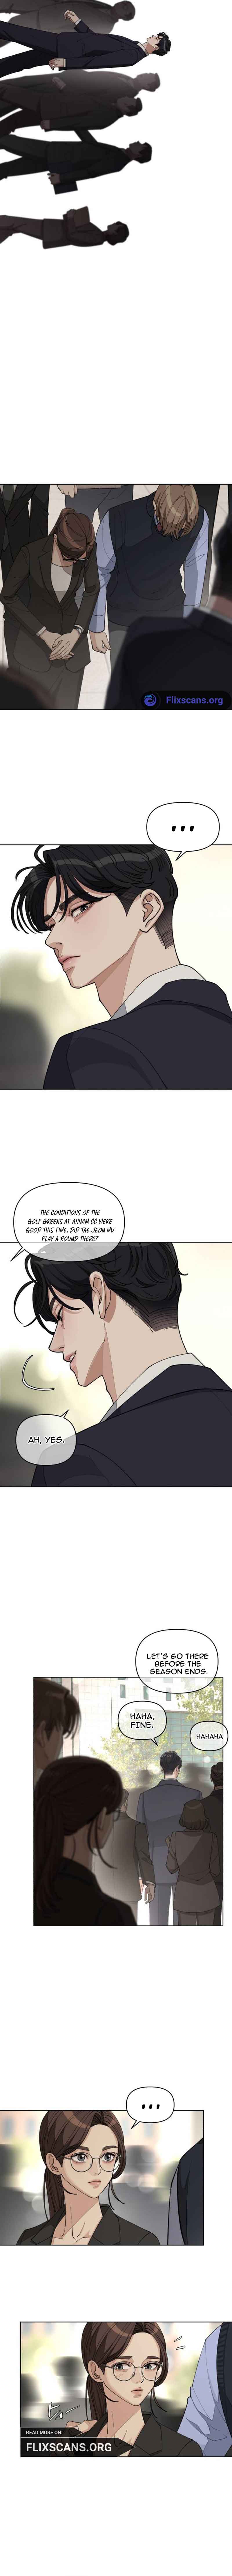 Lee Seob’s love chapter 27